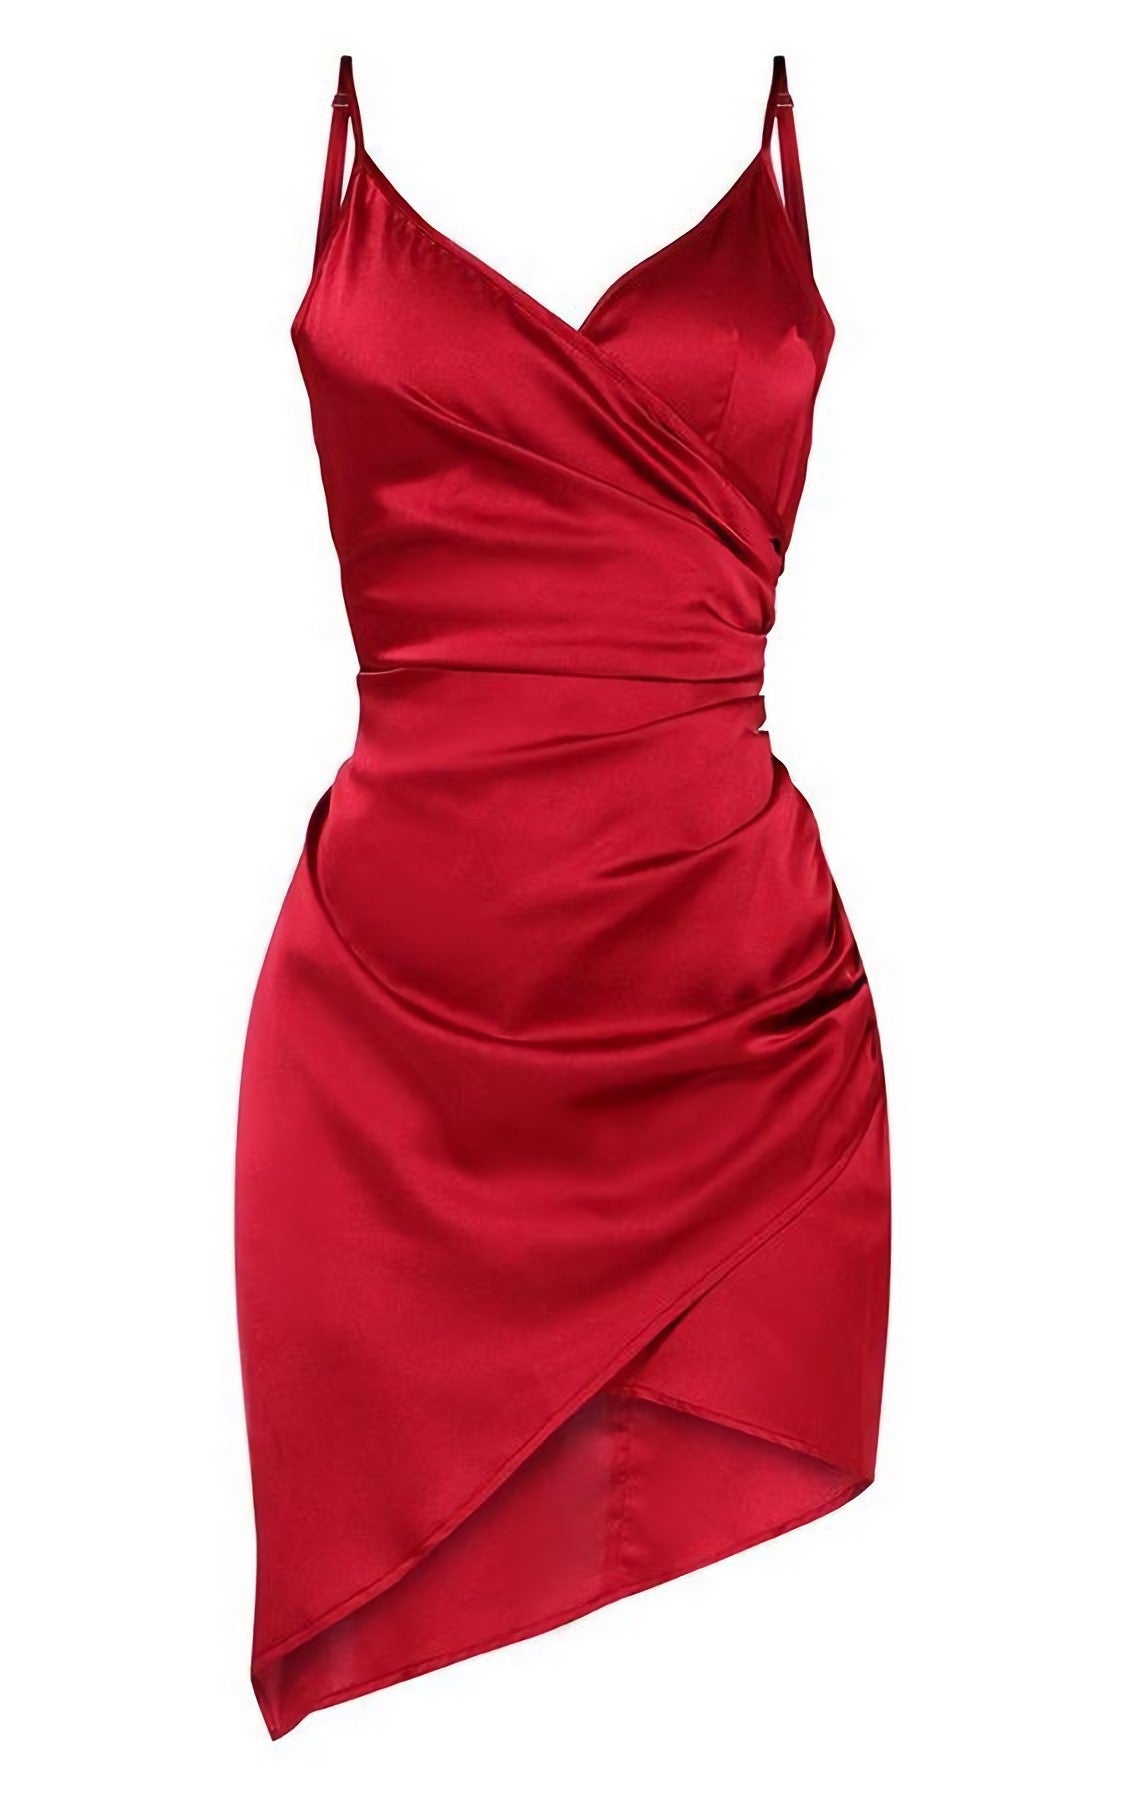 Prom Dress Online, Red Formal Graduation Homecoming Dress